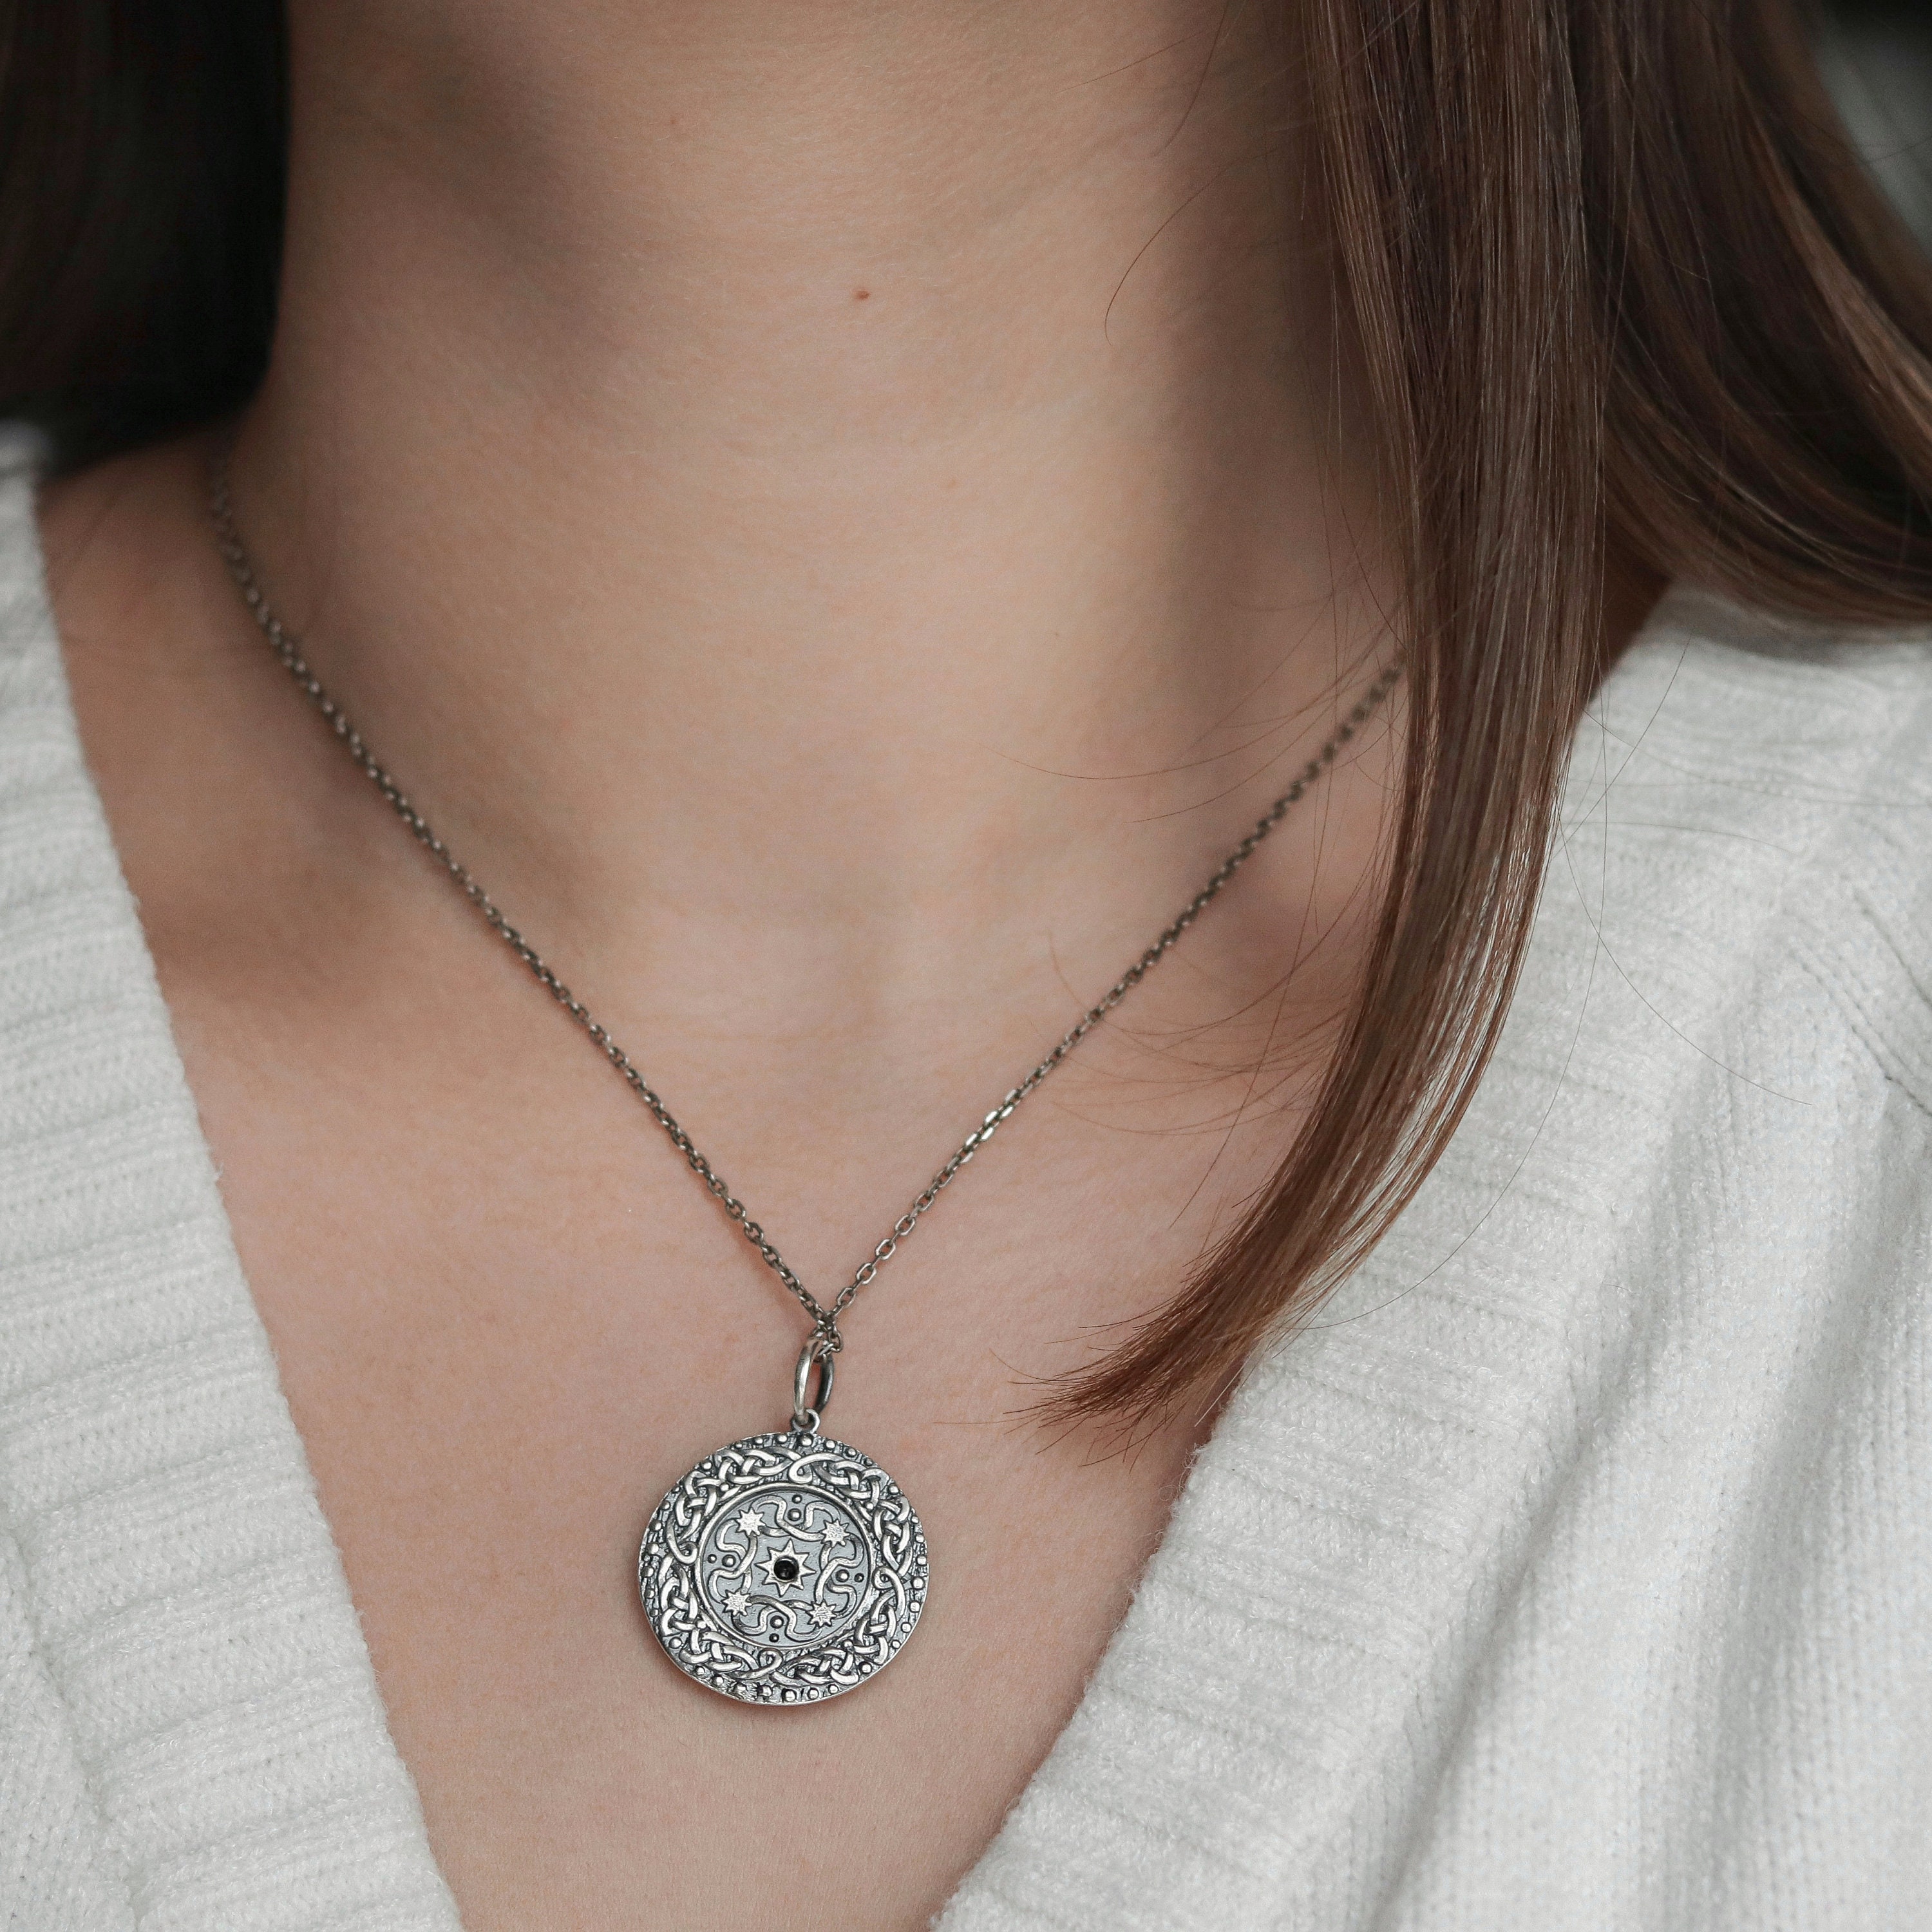 Nordic silver pendant | Etsy